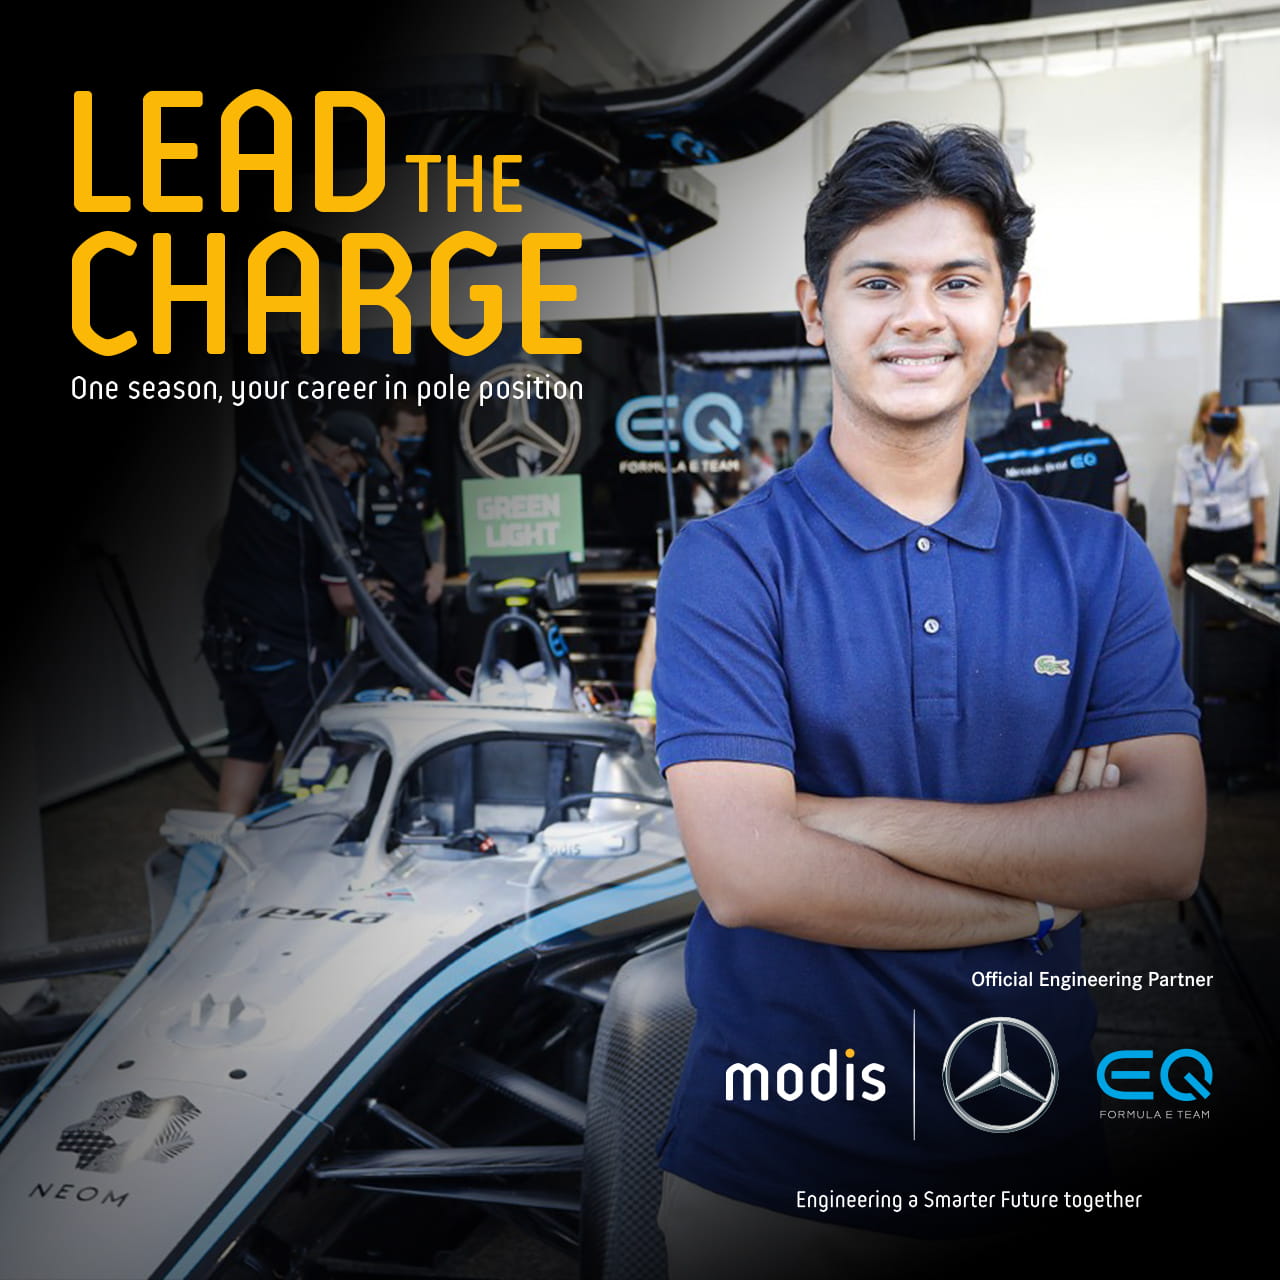 Shreyas Raman, the Akkodis Lead the Charge candidate selected to join the Mercedes EQ Formula E Team for the 2022 ABB FIA Formula E World Championship Season